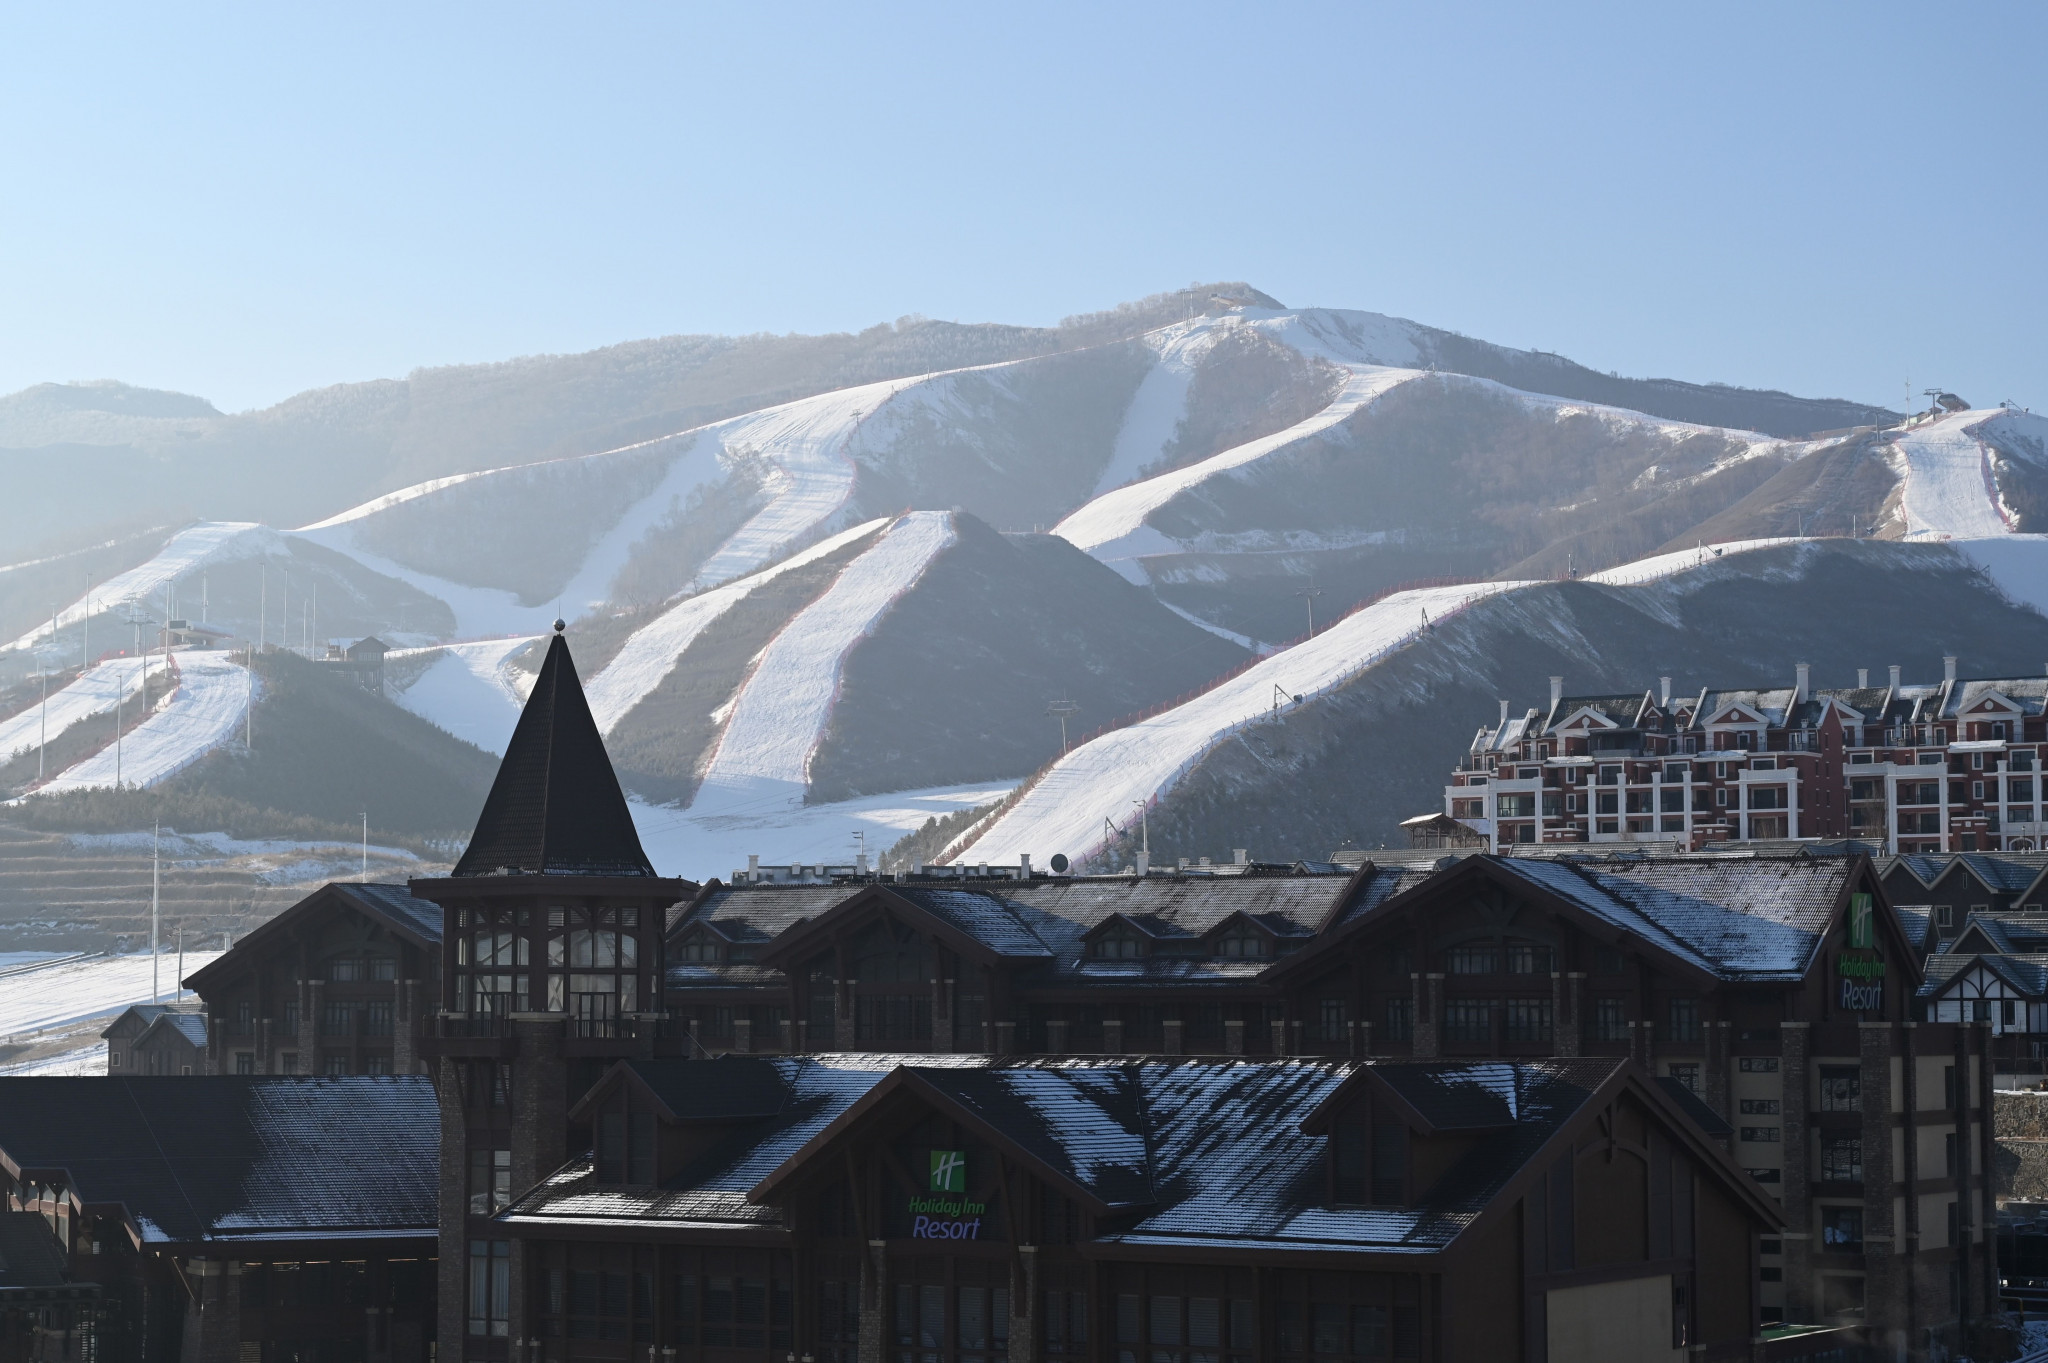 Beijing 2022 Olympics ski slopes open to public for winter season